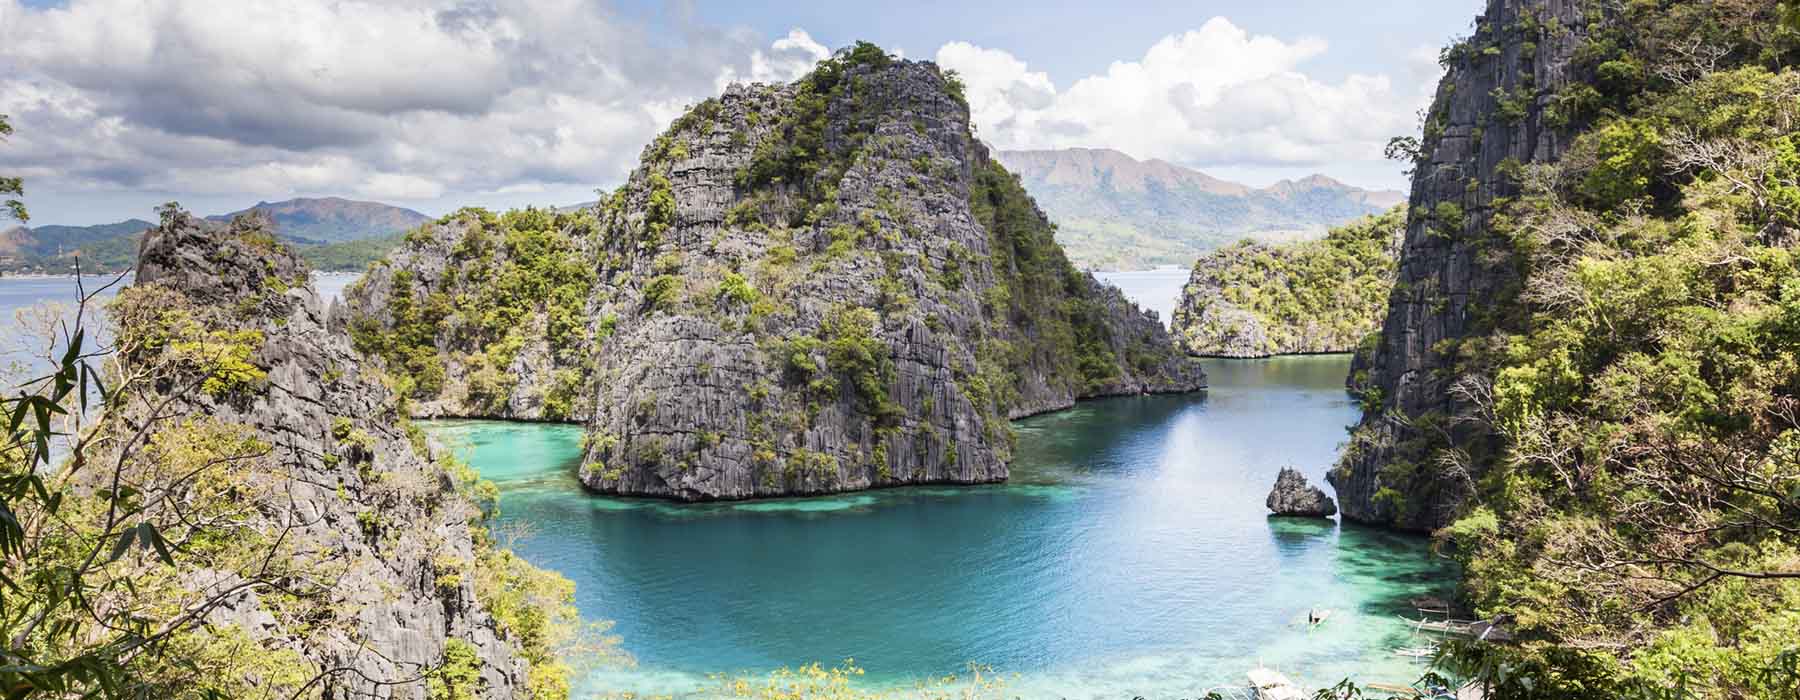 Voyages de luxe Philippines